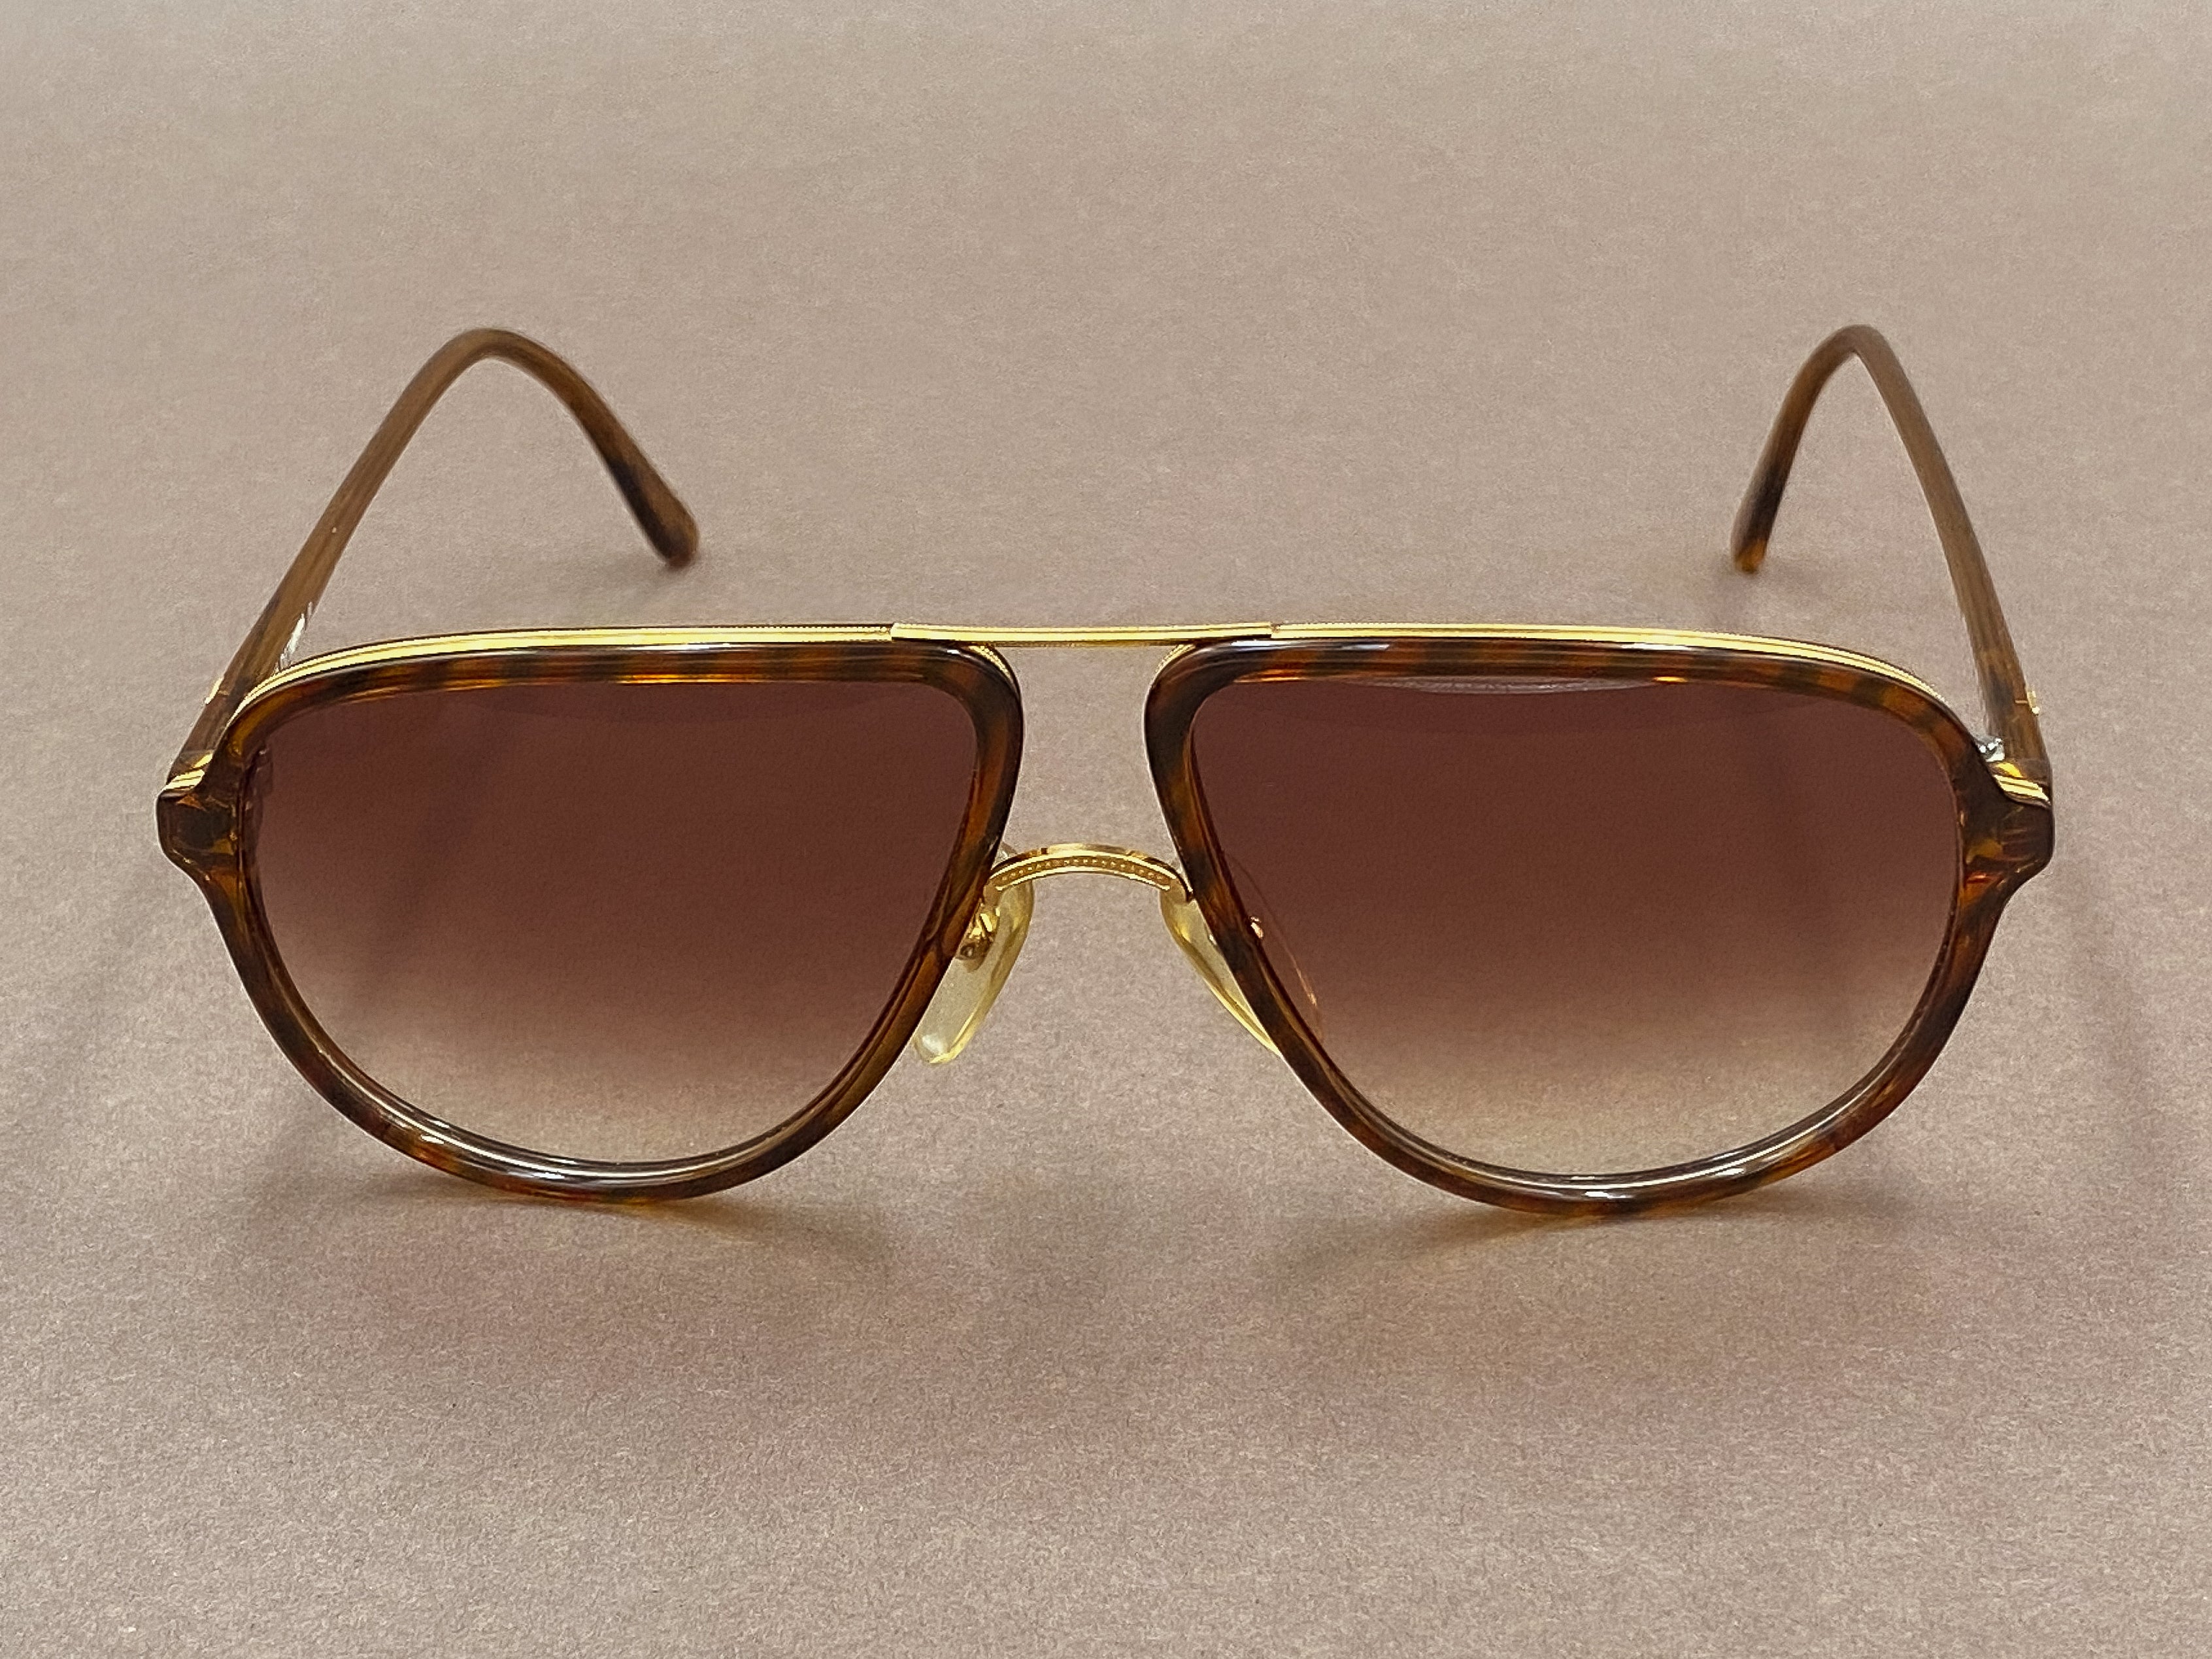 Sunglasses Dunhill 6102 90's Men's Shades